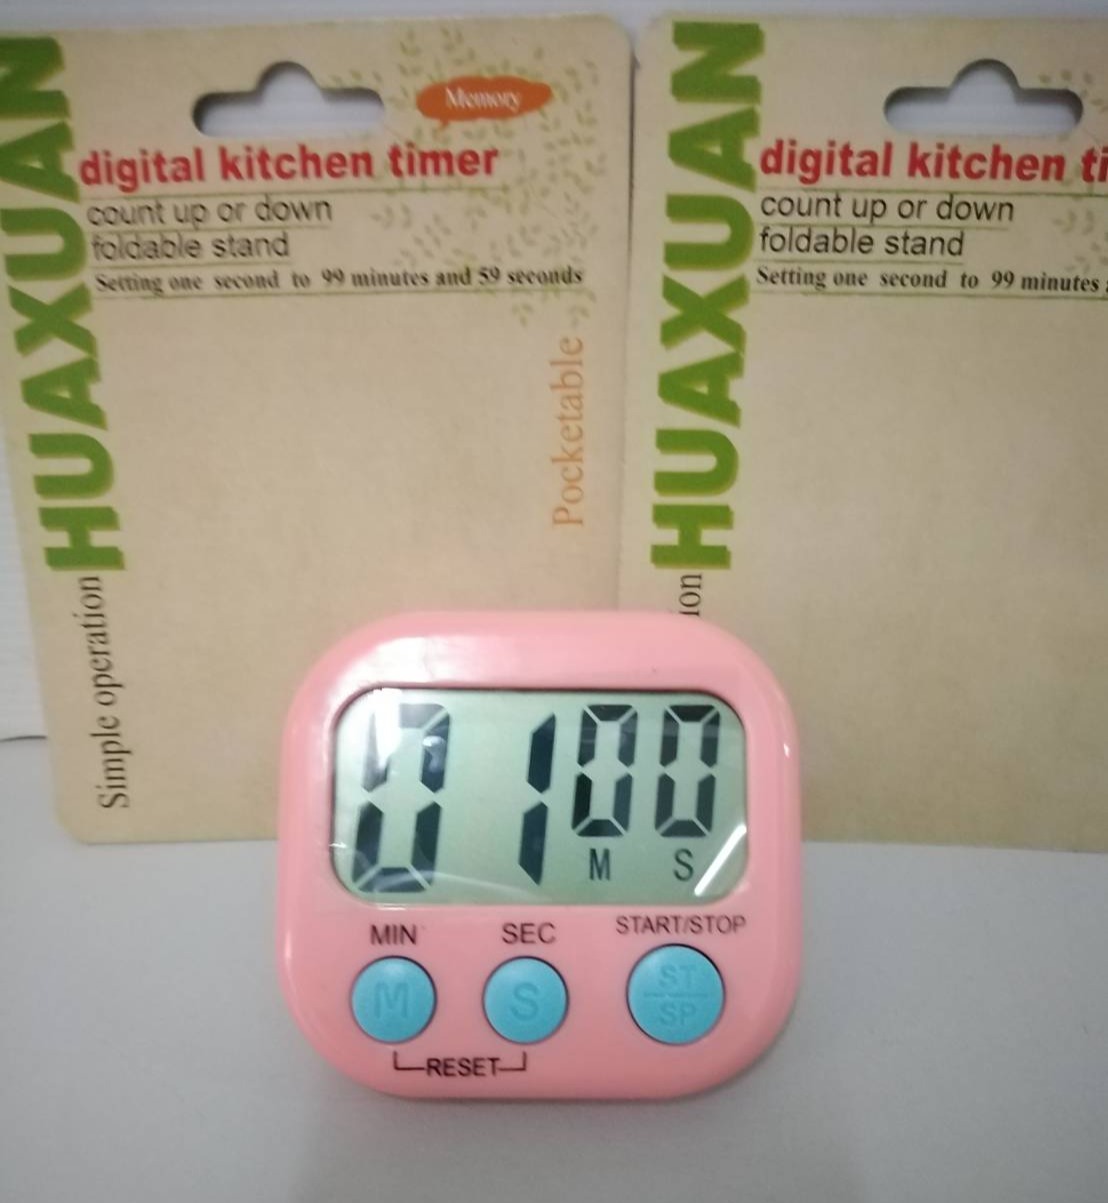 KITCHEN TIMER HX103 นาฬิกาจับเวลา Digital kitchen timer